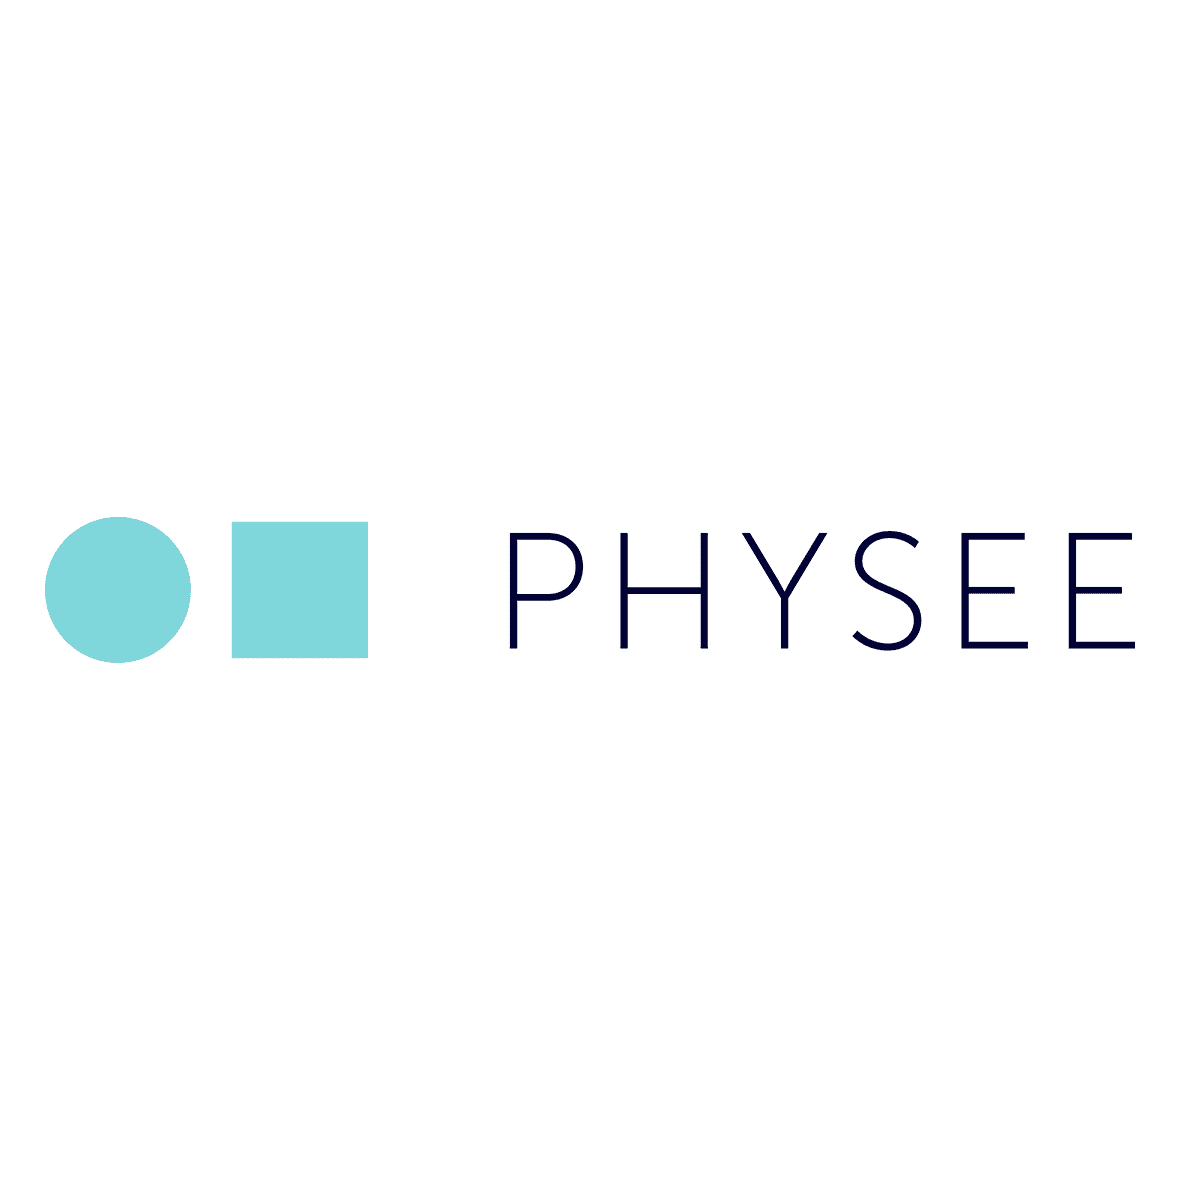 Physee's logo